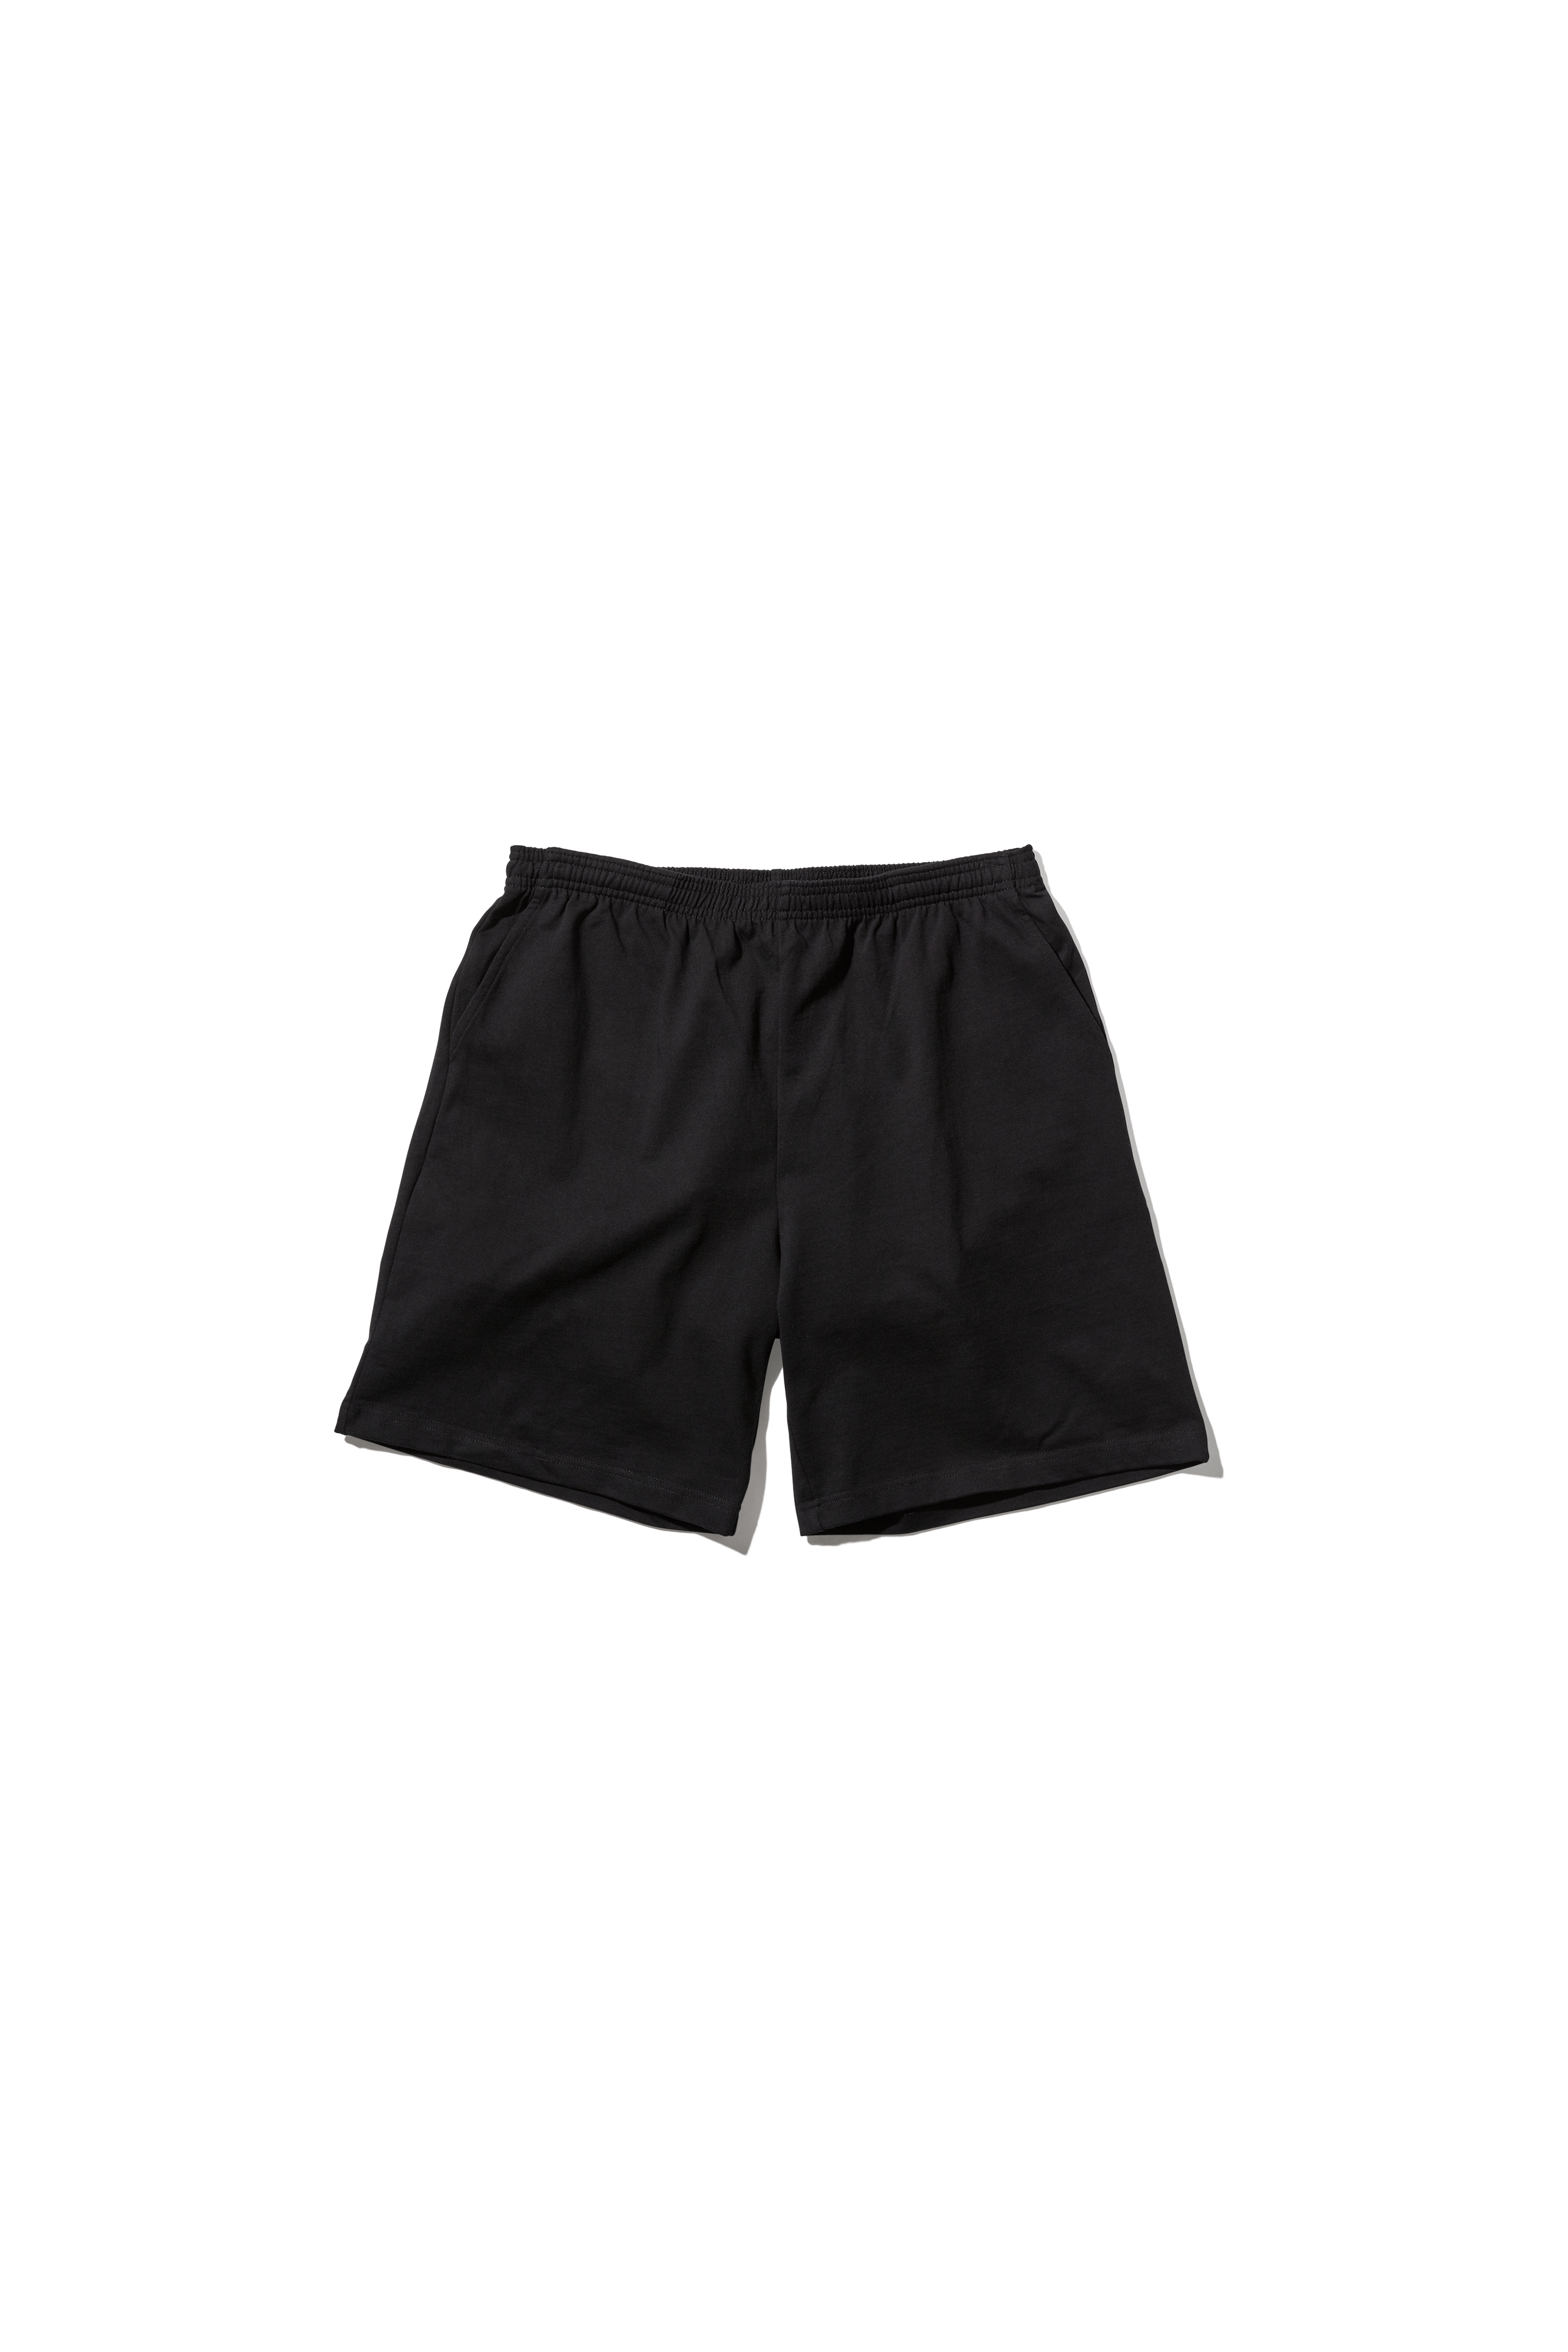 Gym Class Shorts – MADE